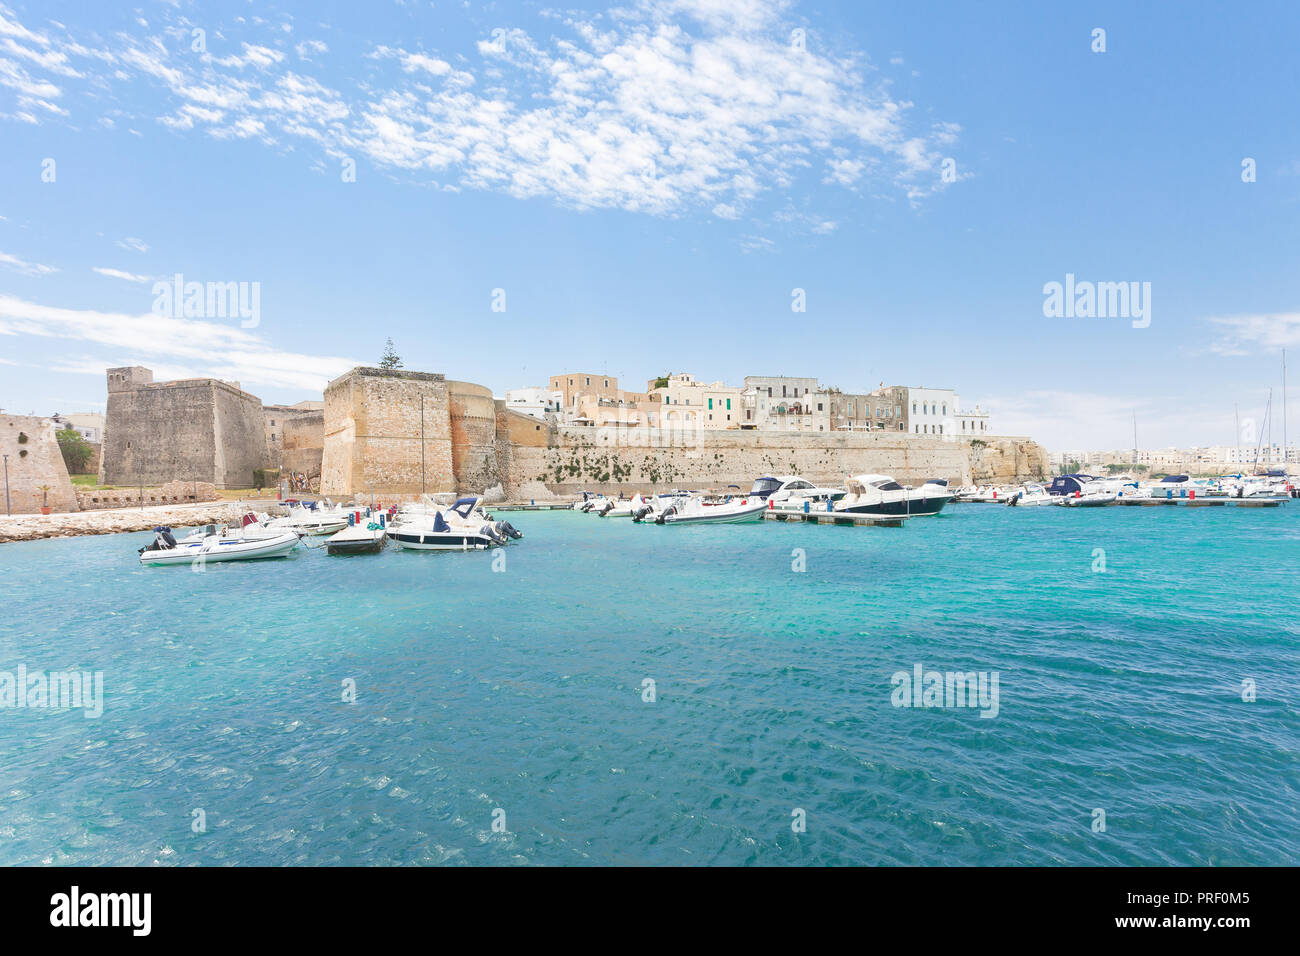 Otranto, Apulien, Italien - Motorboote am Hafen von Otranto in Italien Stockfoto